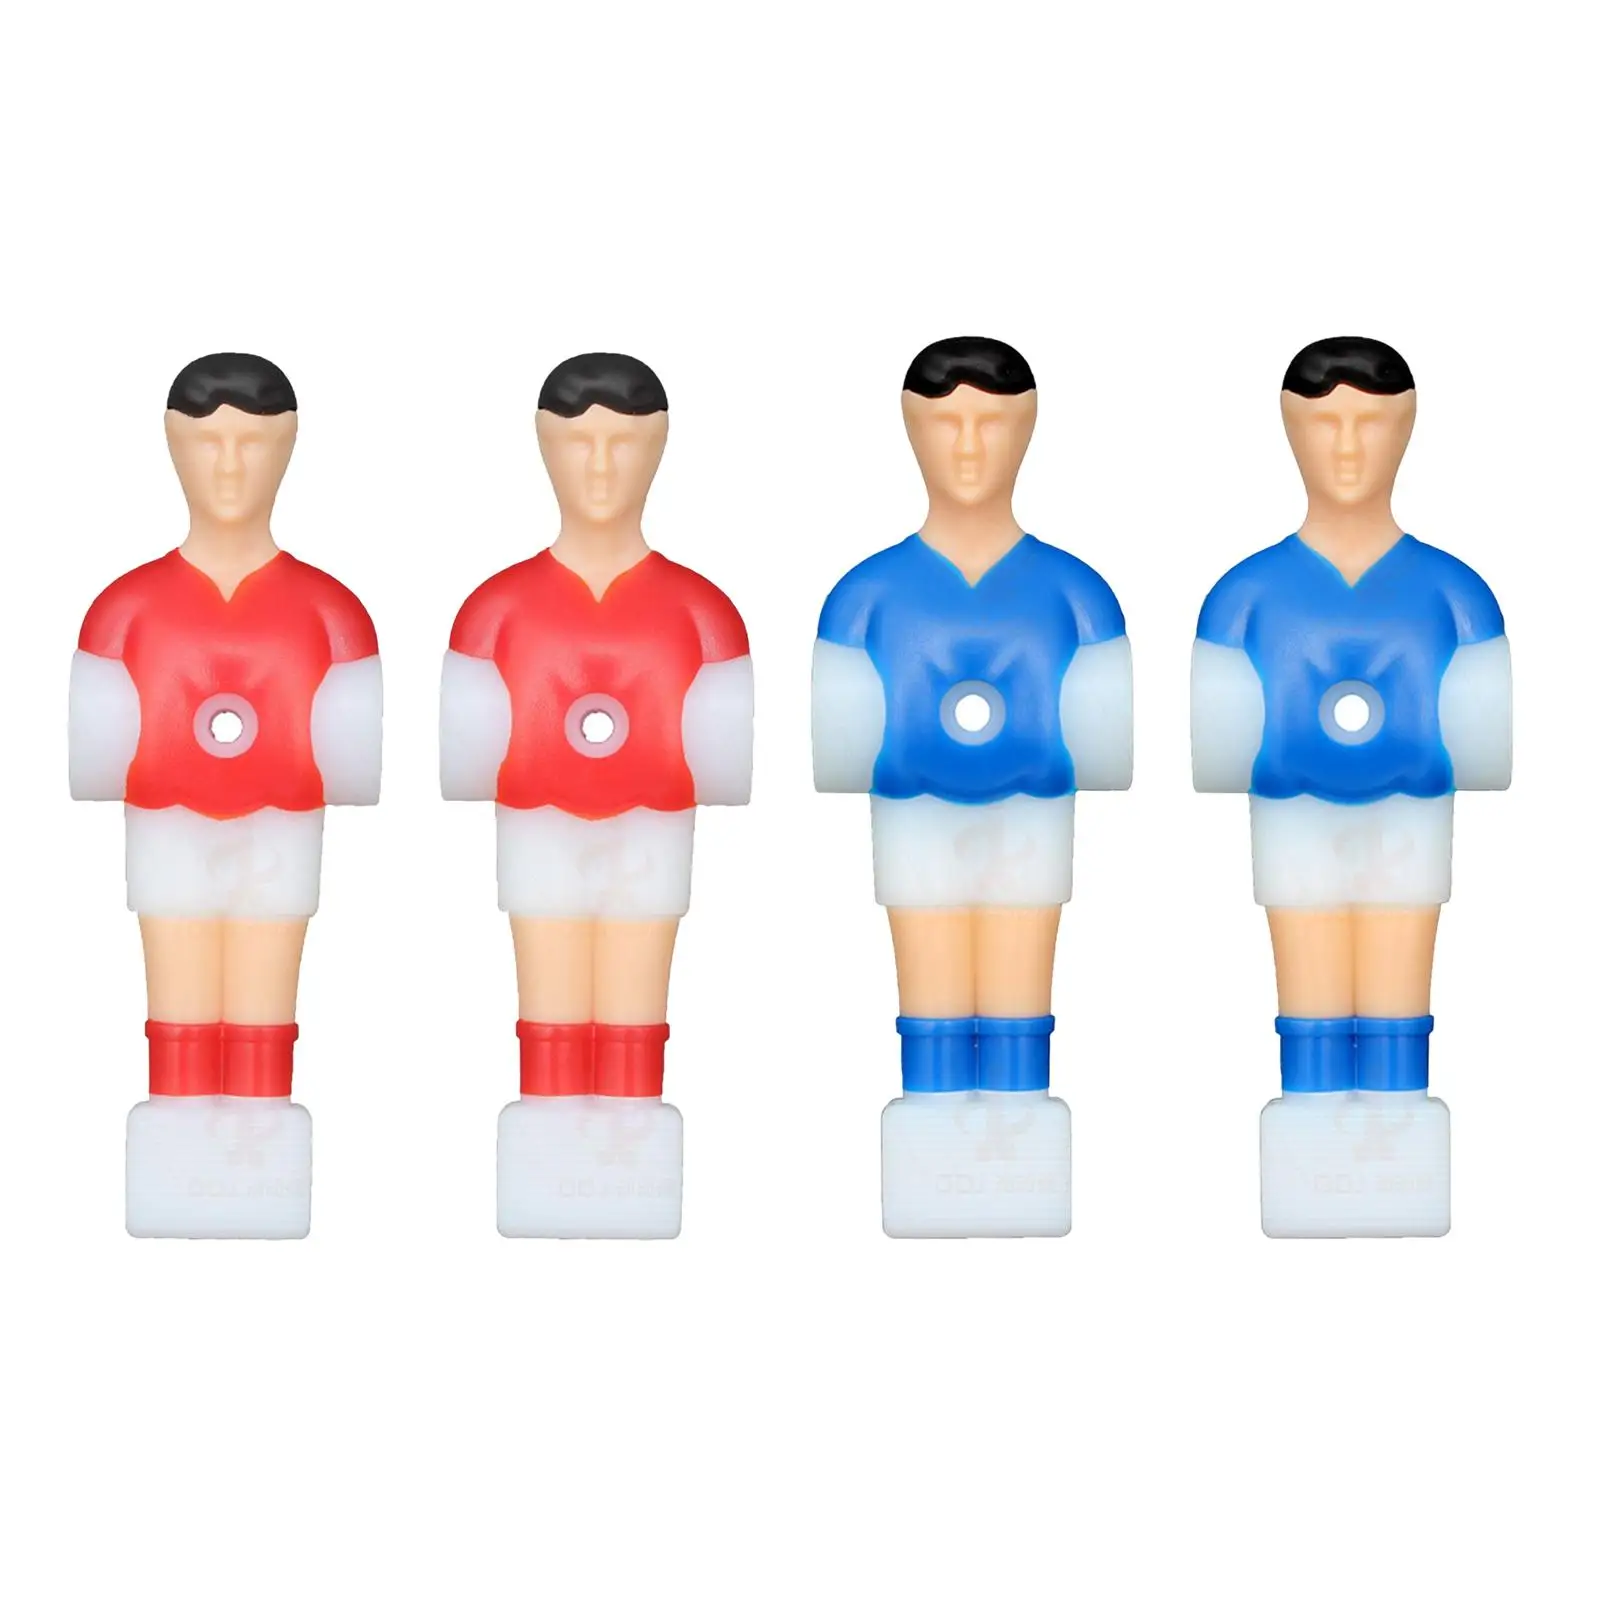 4Pcs Foosball Men Replacement Football Players Figures Toys Football Player